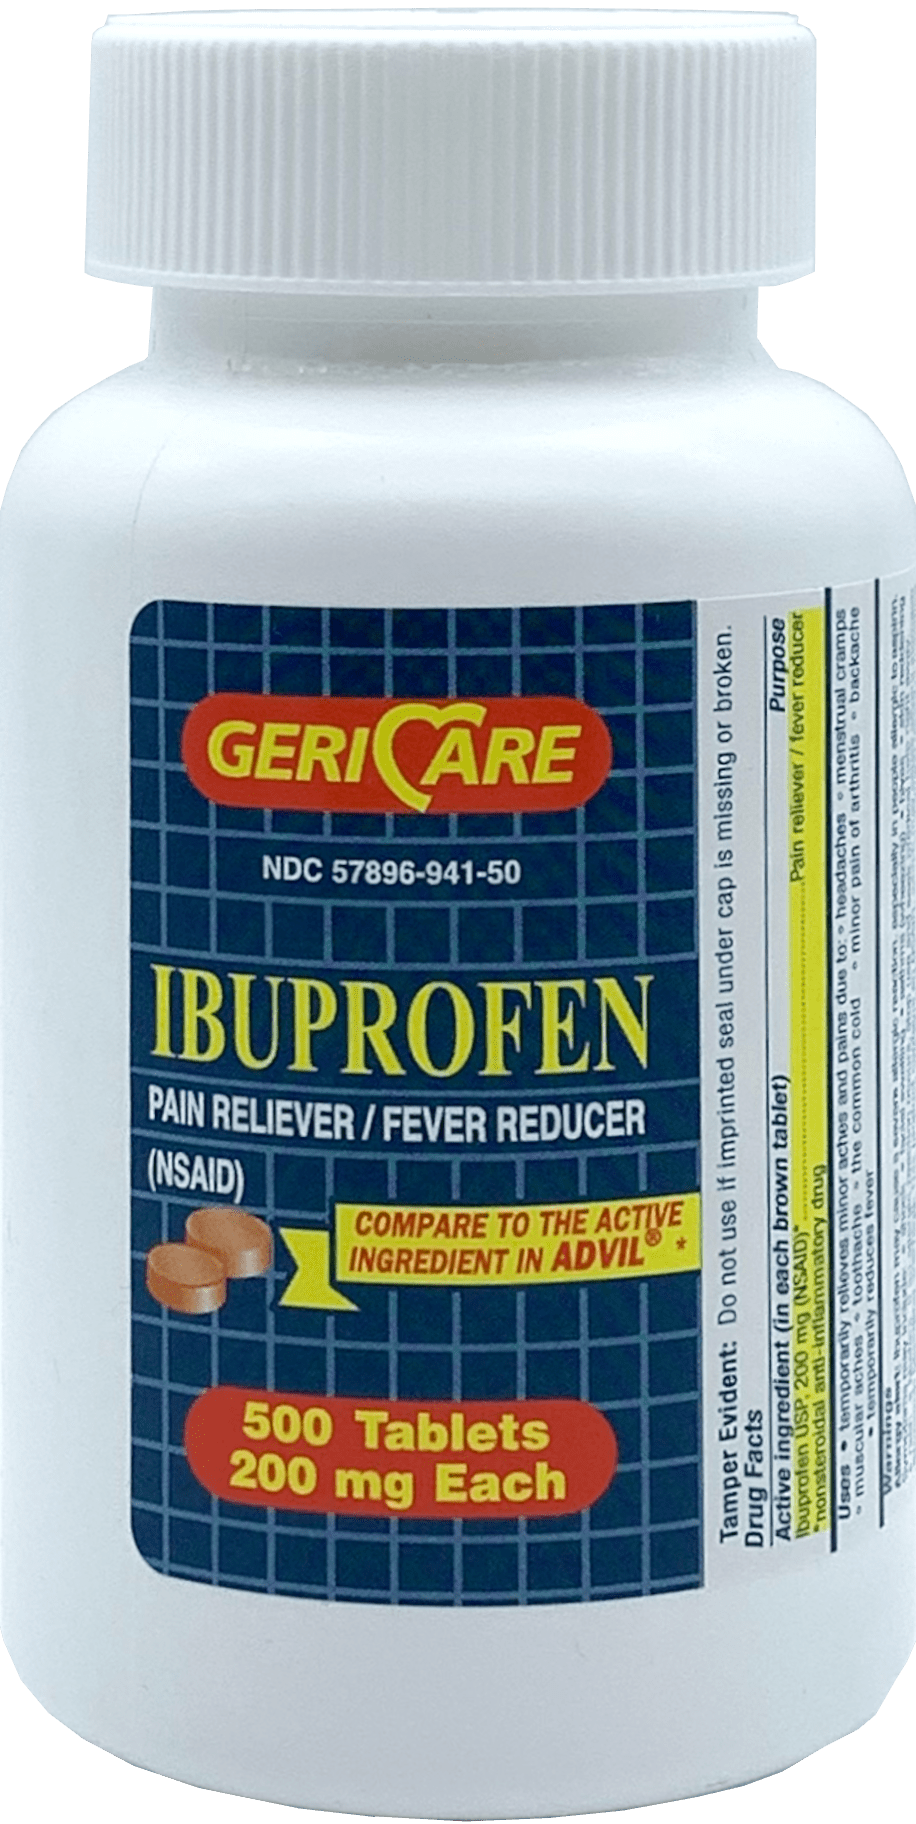 Ibuprofen 200mg – 500 Tablets